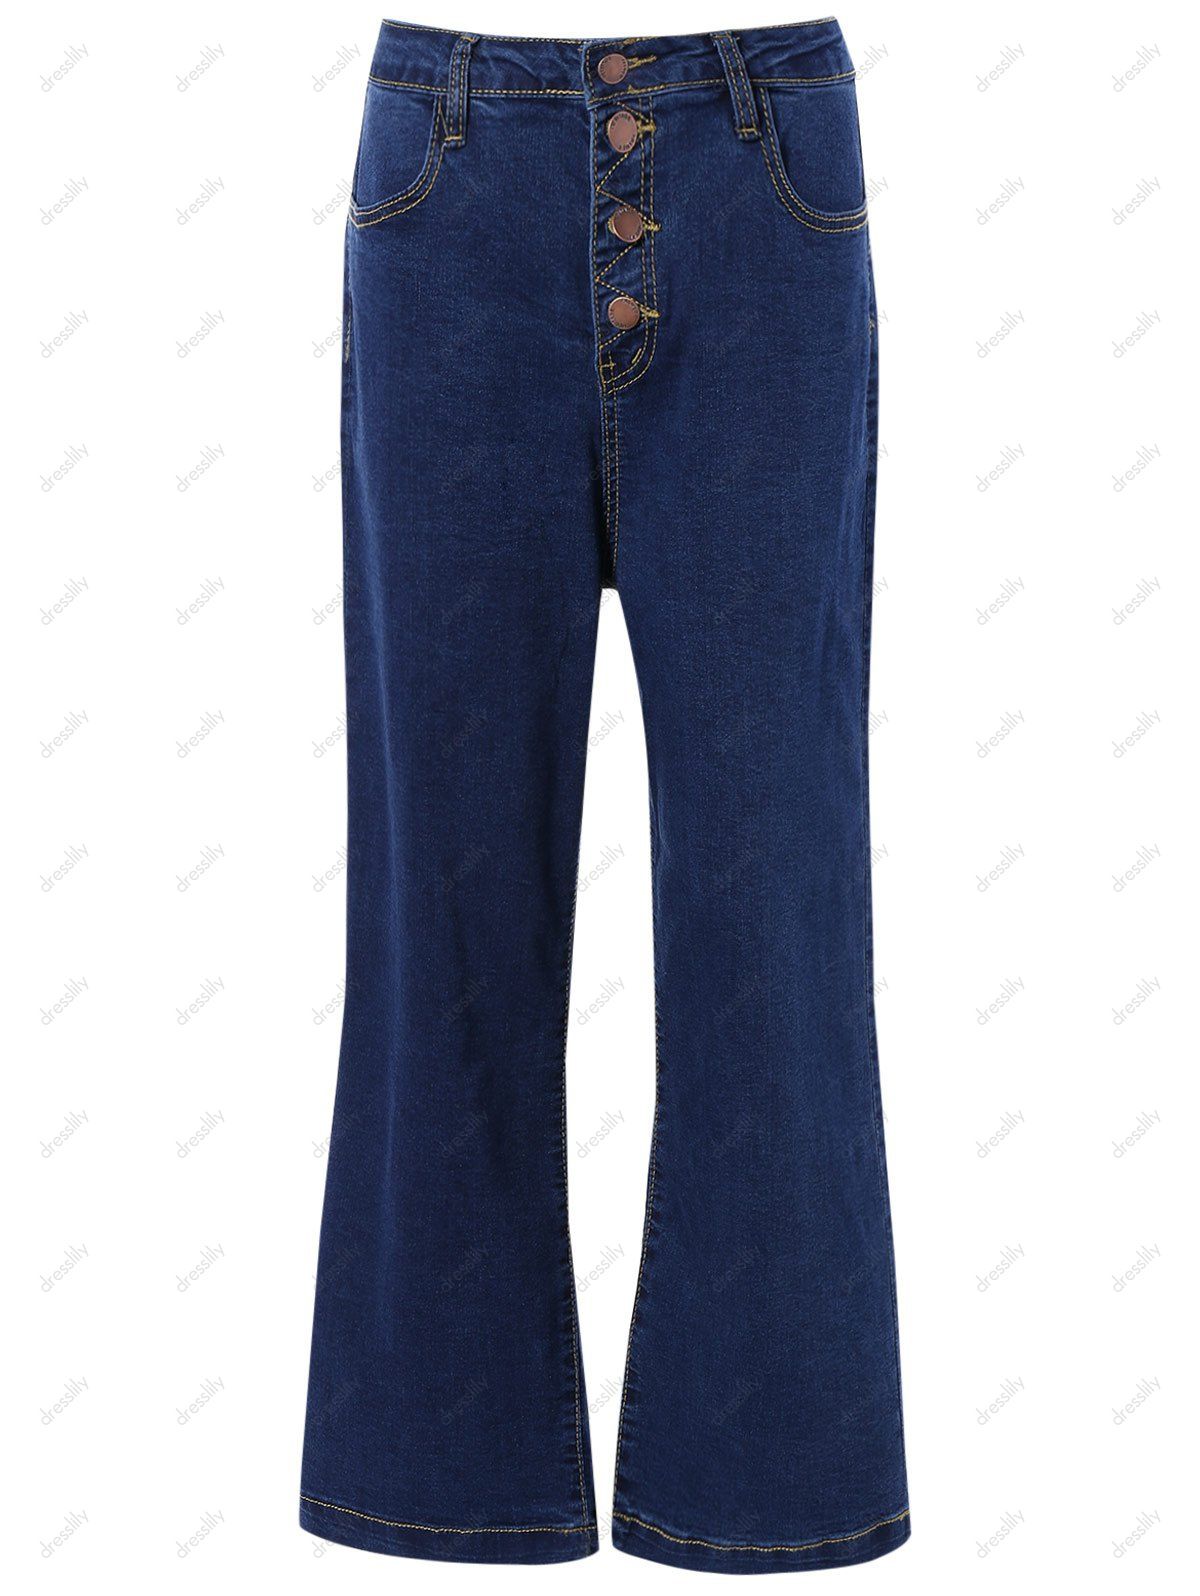 High waisted crop flare jeans manufacturer turkey jackson, One color tie dye shirt, khaki bodycon dress long sleeve. 